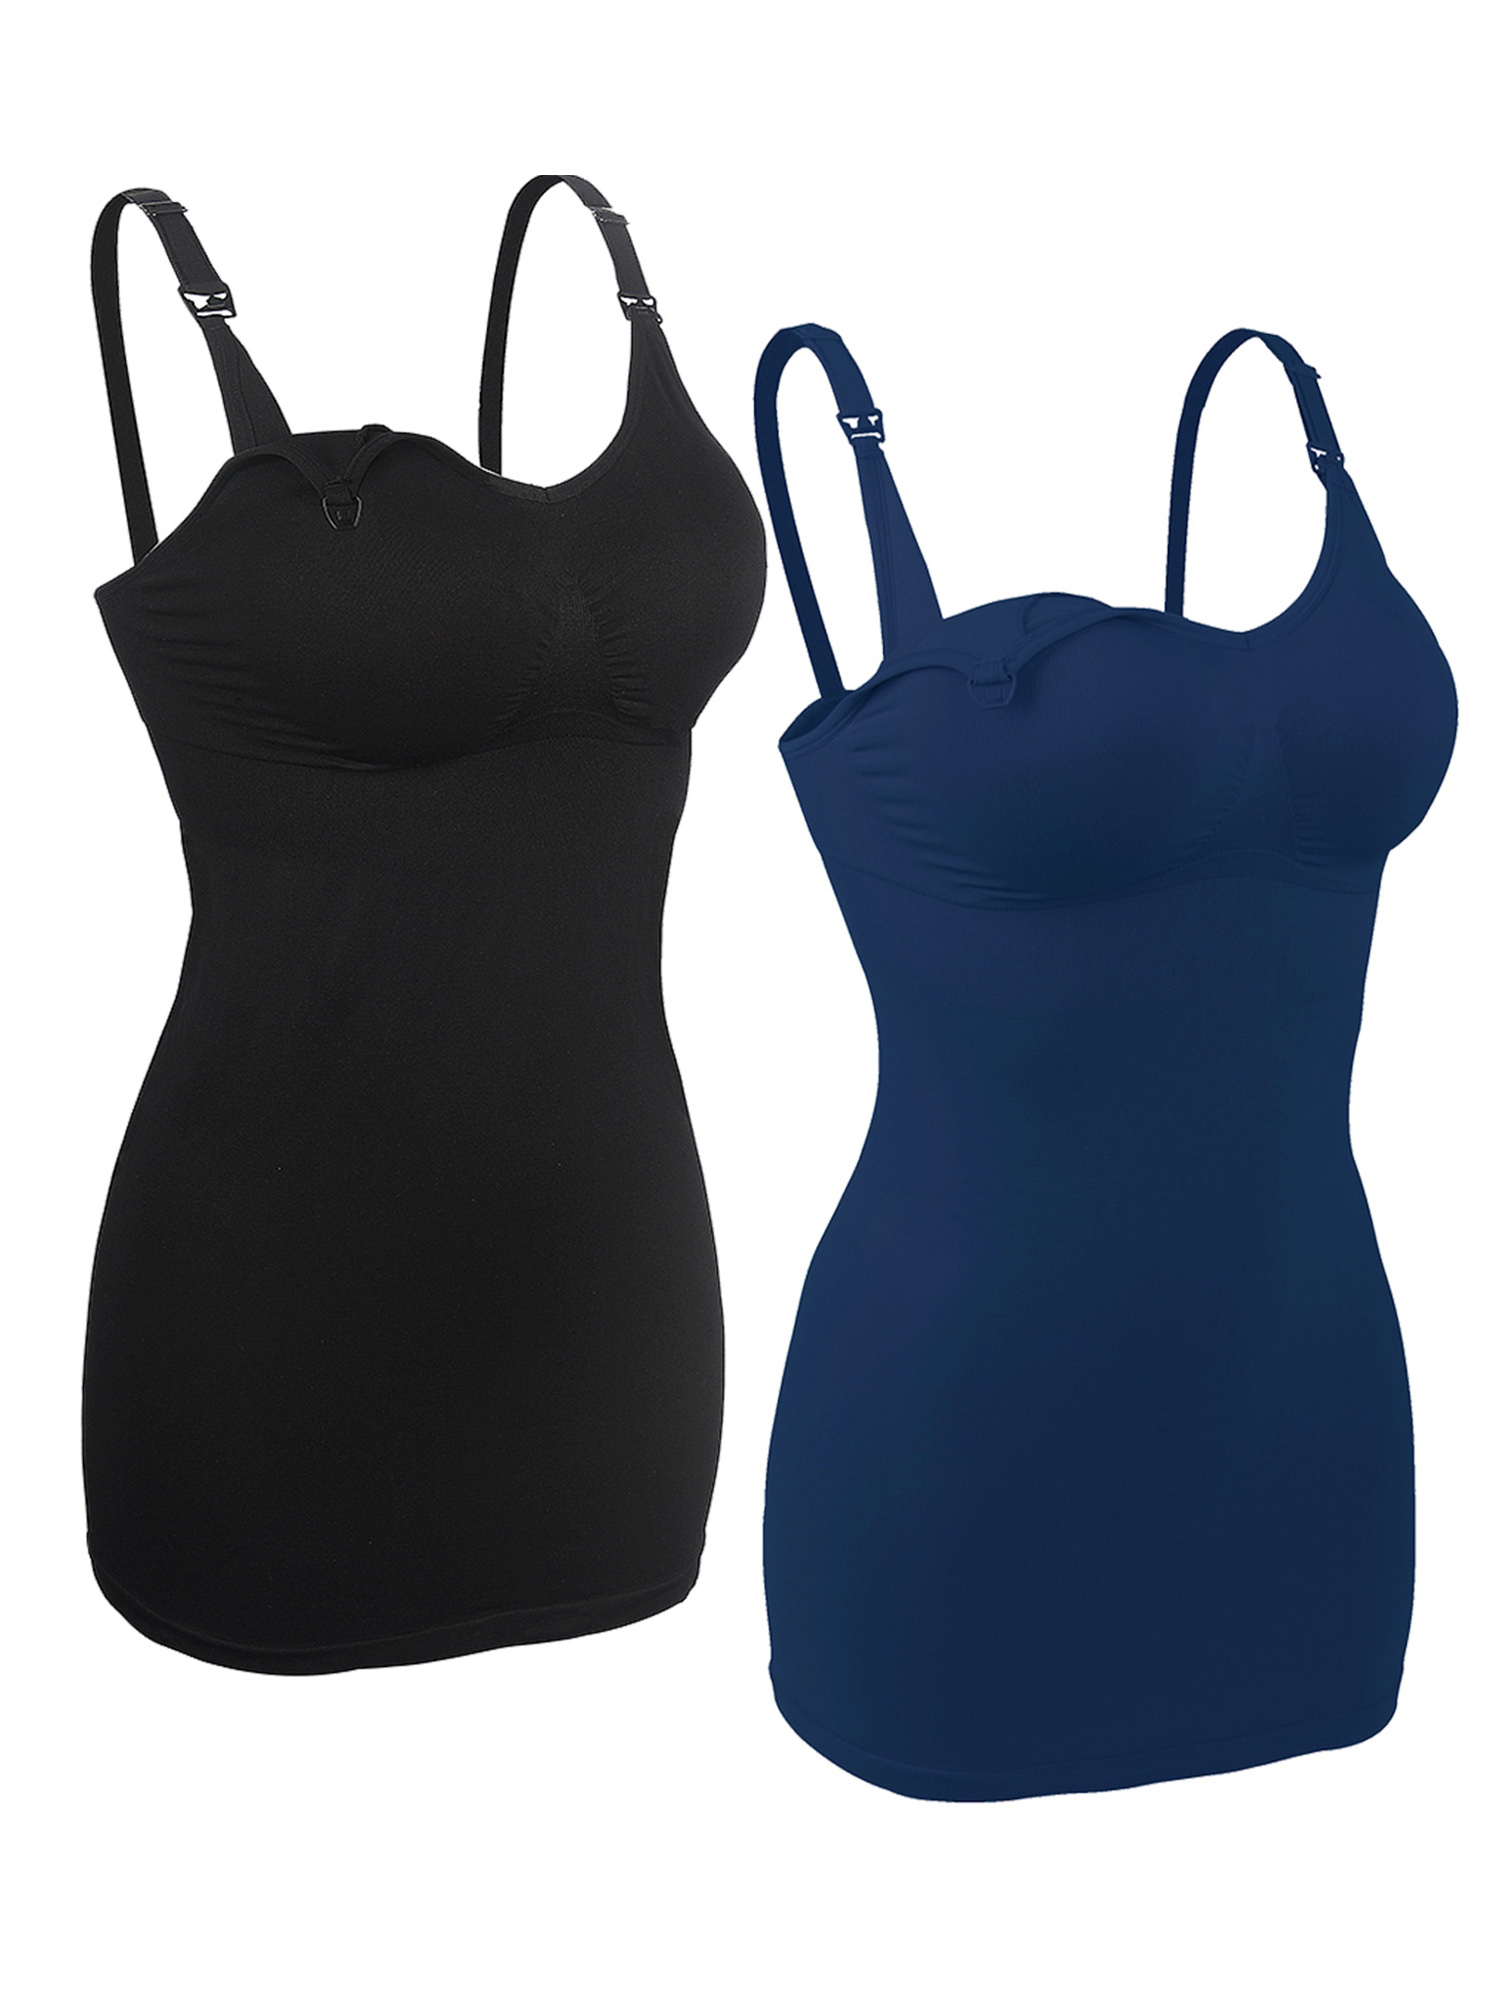 Elegant Bodycon Nursing Suspenders, Maternity Cami Tops With Detachable  Design For Breastfeeding